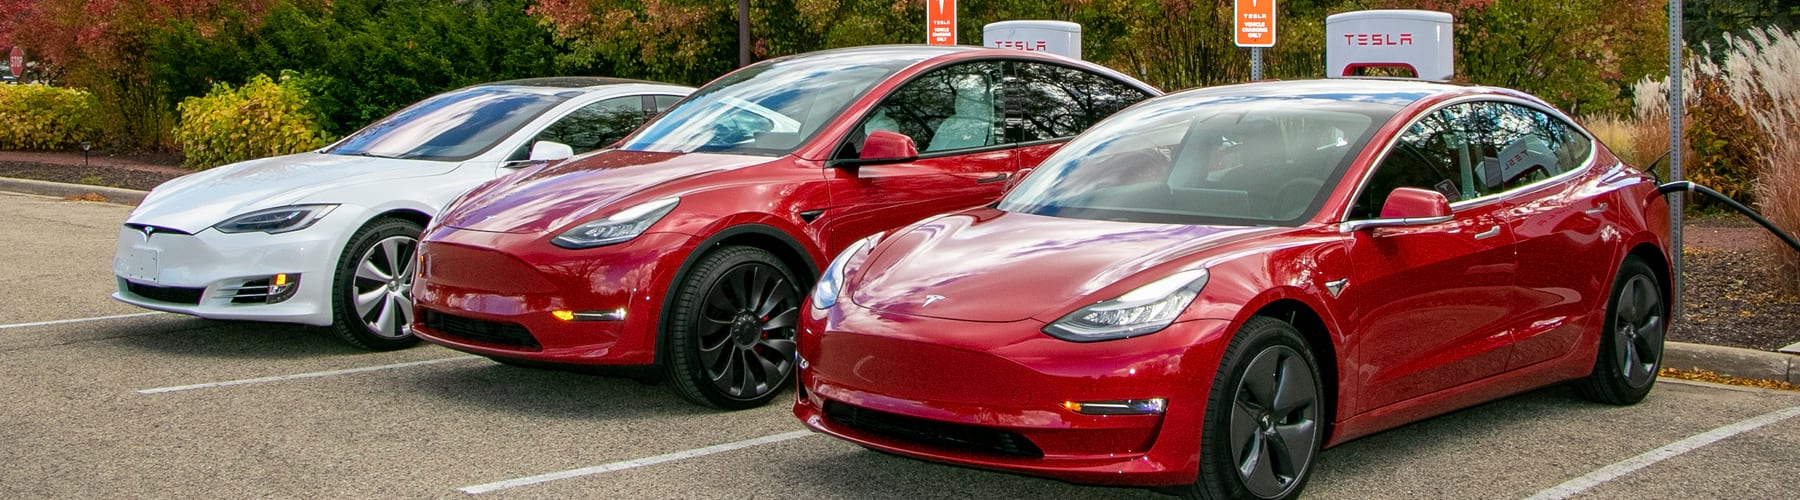 3 Tesla cars